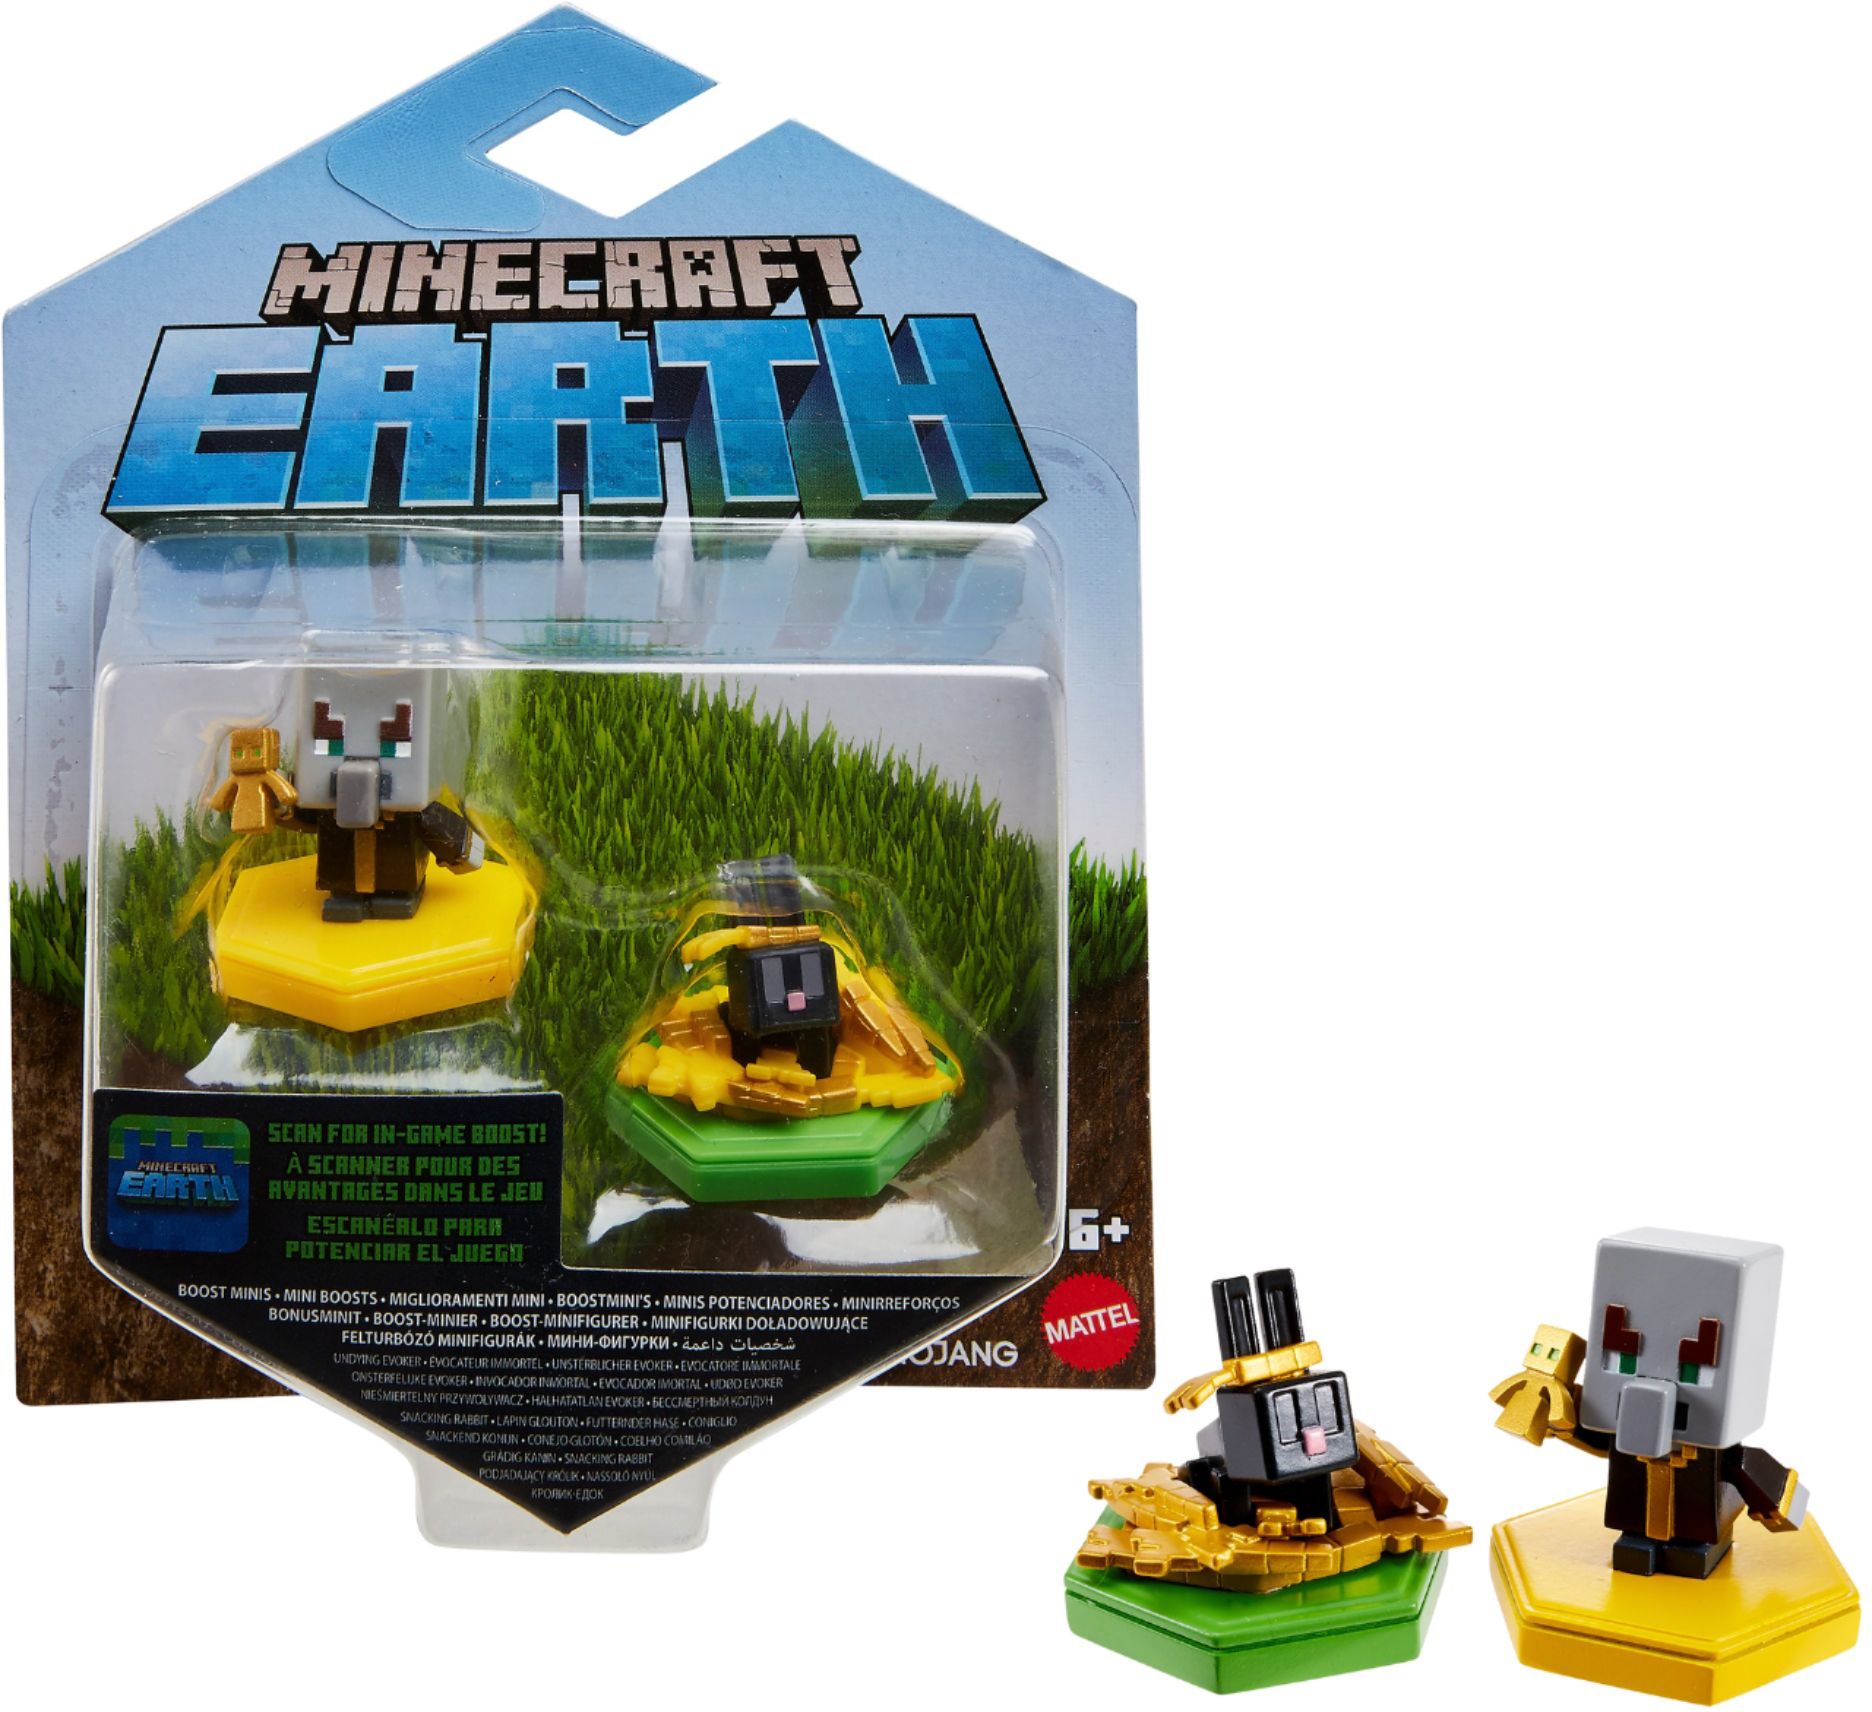 Best Buy: Mattel Minecraft Earth Boost Mini Figure Styles May Vary